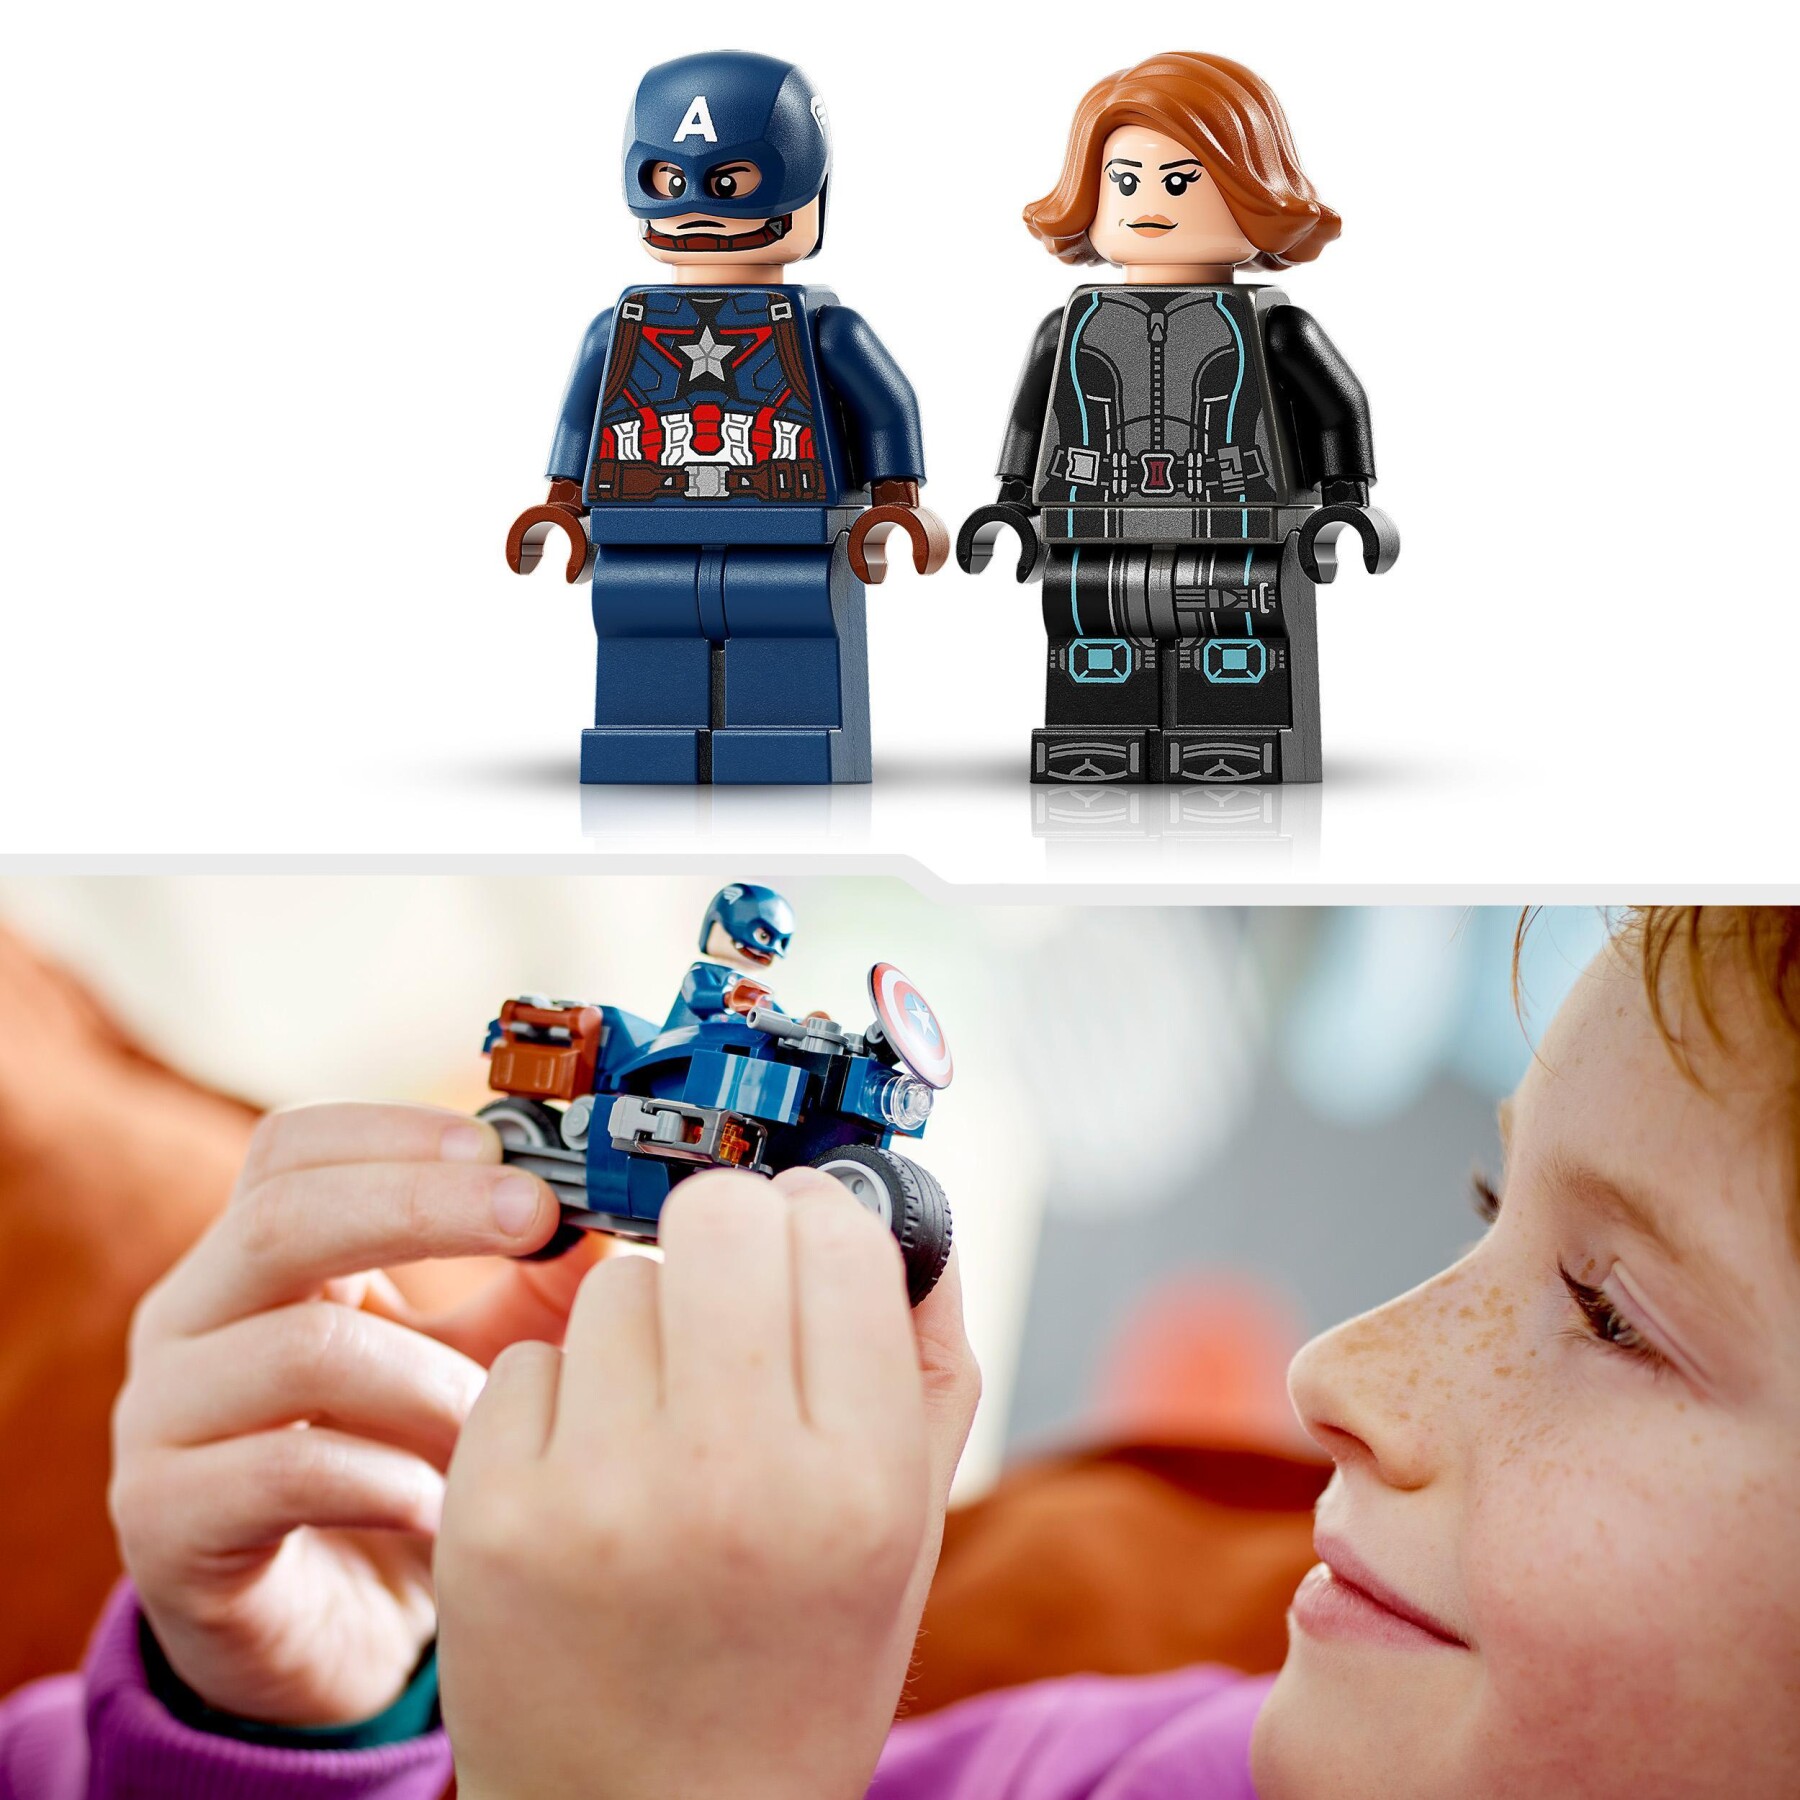 Lego marvel 76260 motociclette di black widow e captain america, set avengers age of ultron con 2 supereroi e moto giocattolo - LEGO SUPER HEROES, Avengers